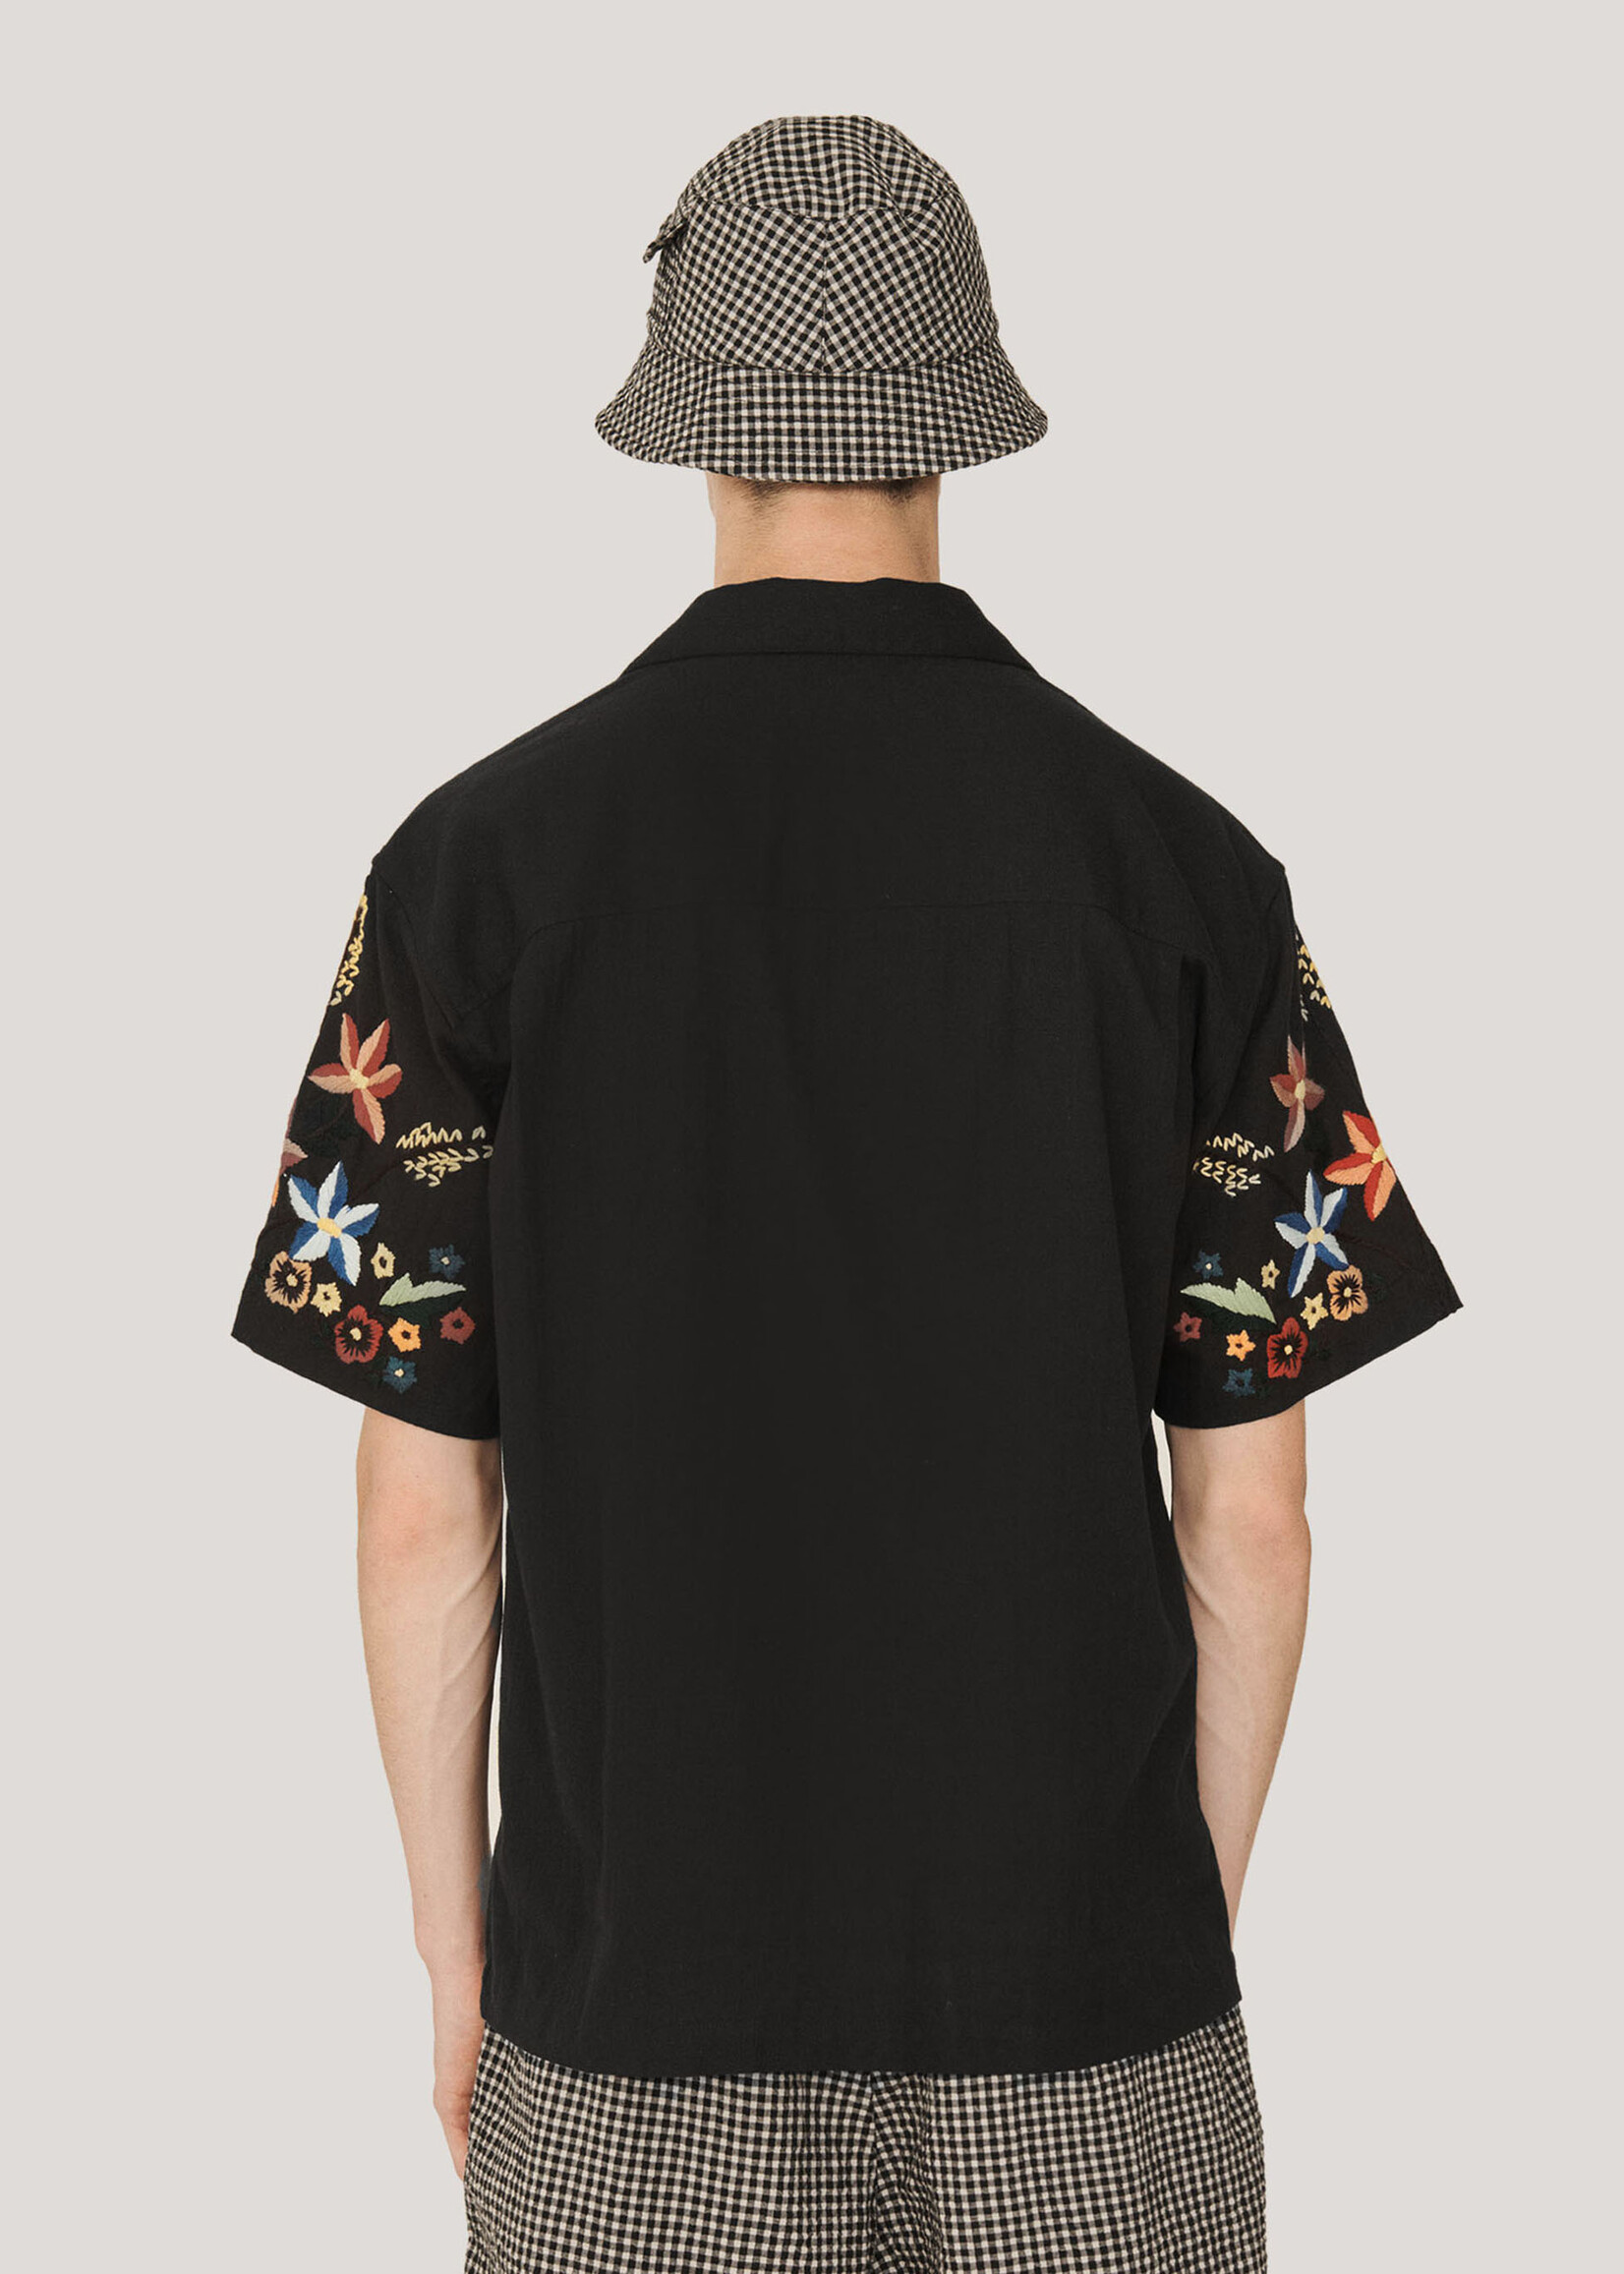 YMC Idris Embroidered Shirt in Black